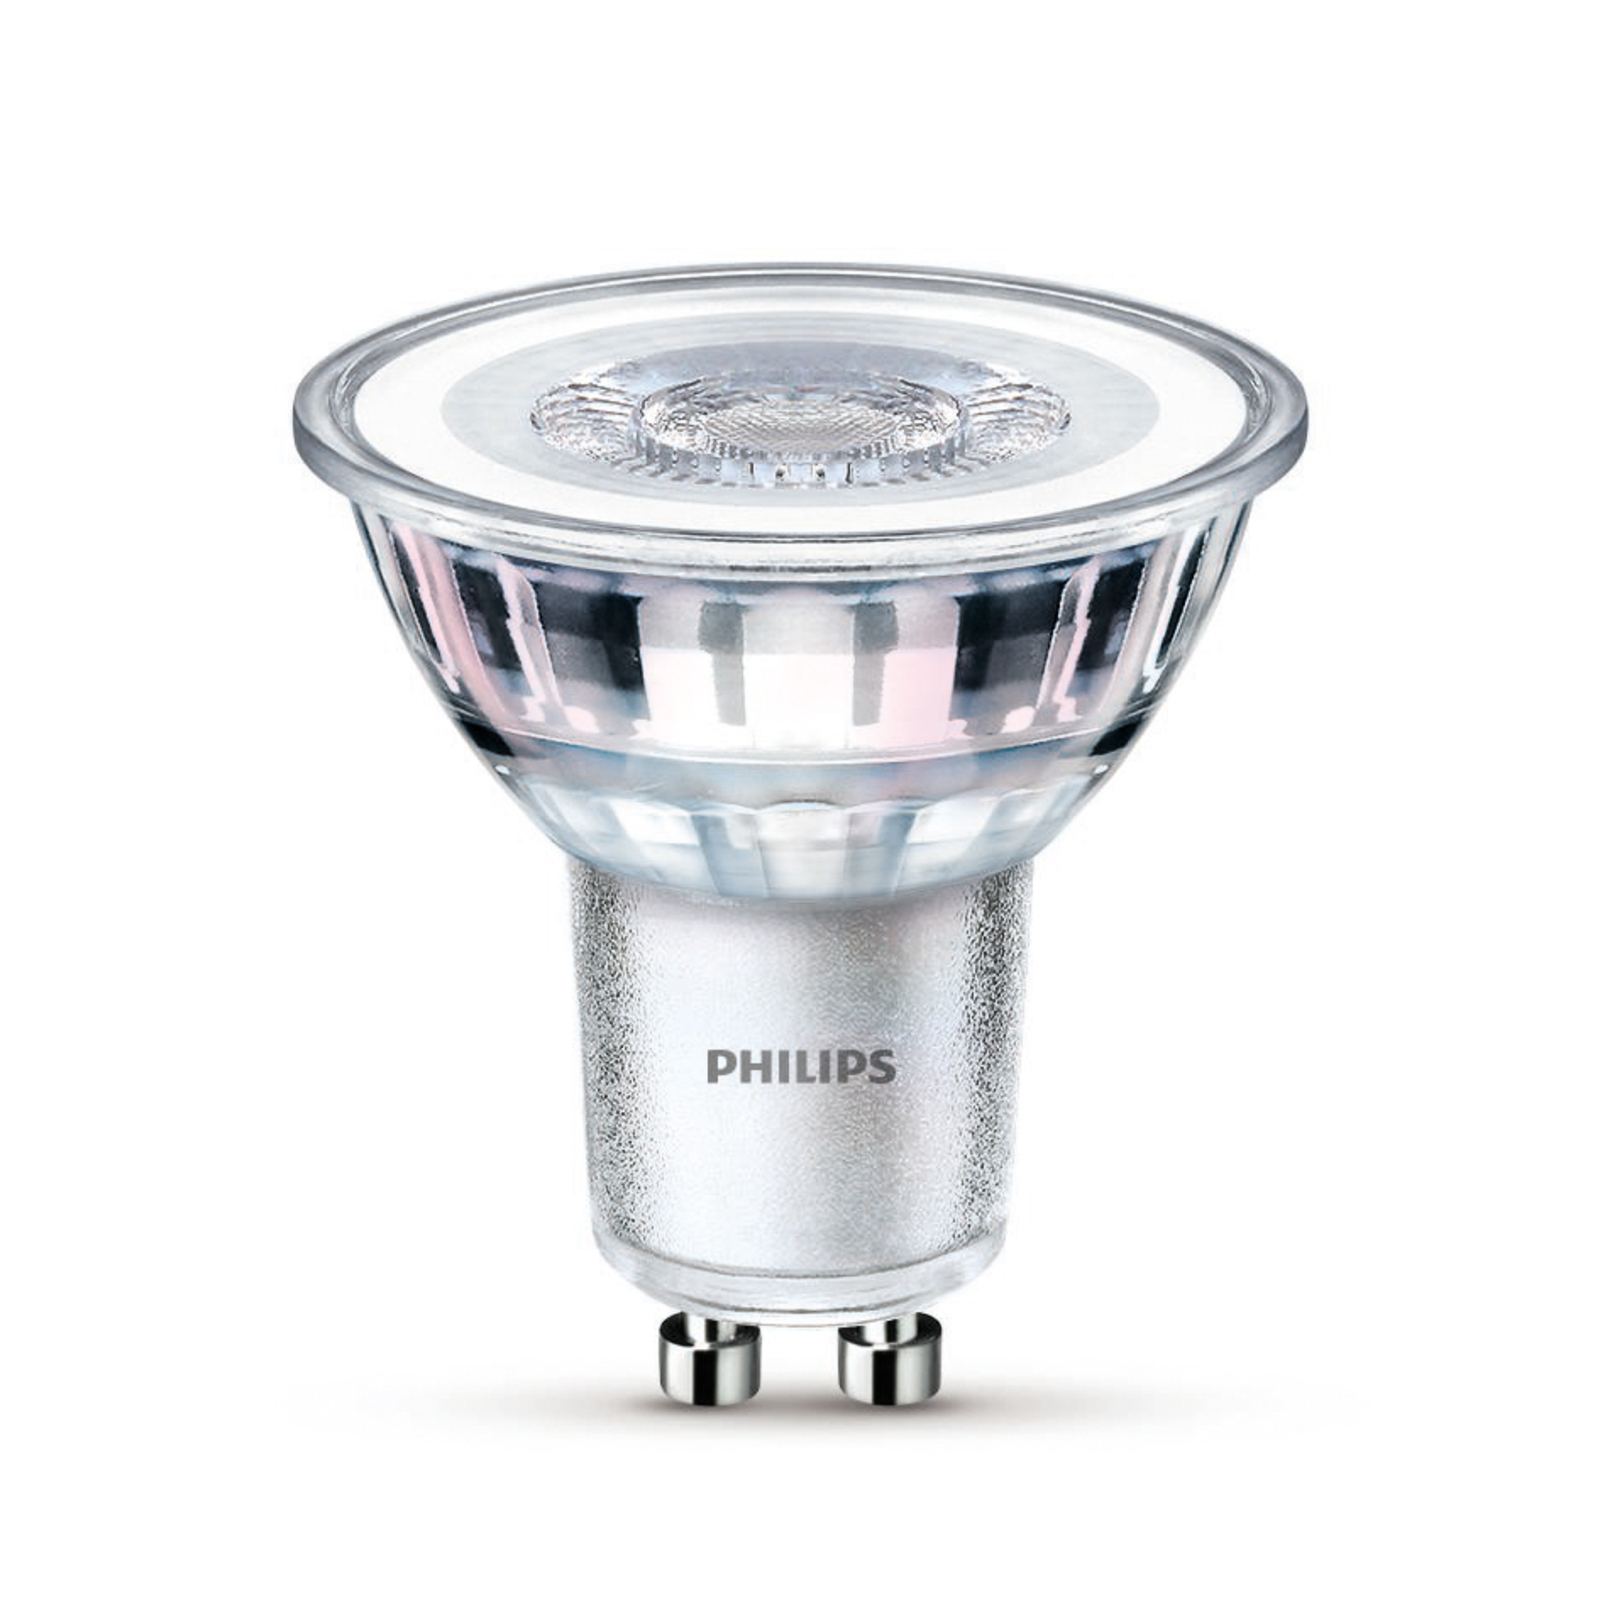 Philips LED GU10 3,5W 255lm 827 číra 36° 2 ks